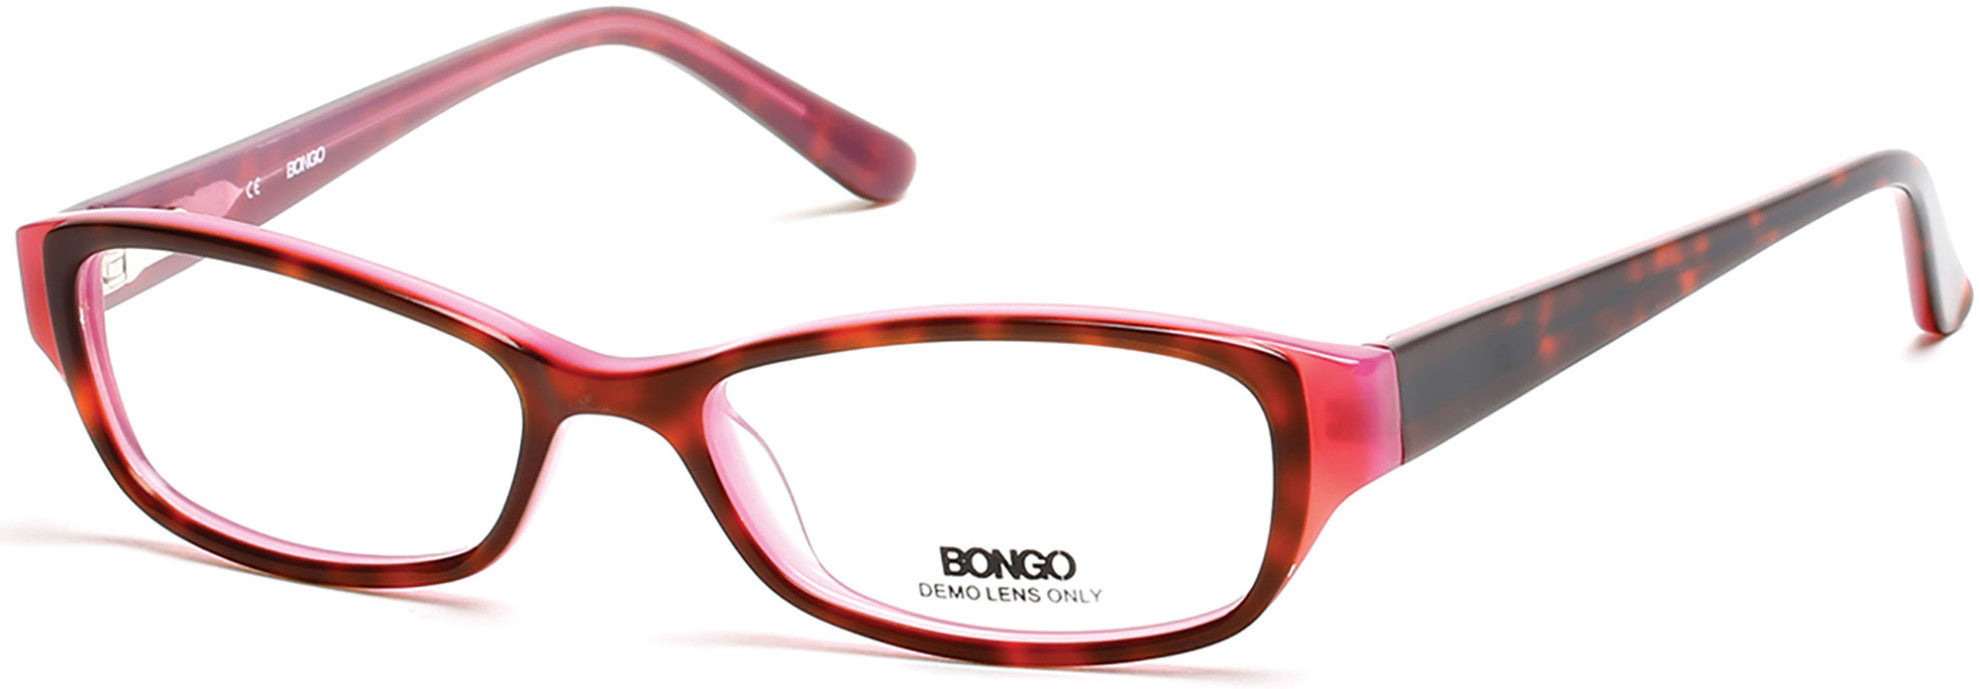 Bongo Eyeglasses BG0159 054-054 - Red Havana